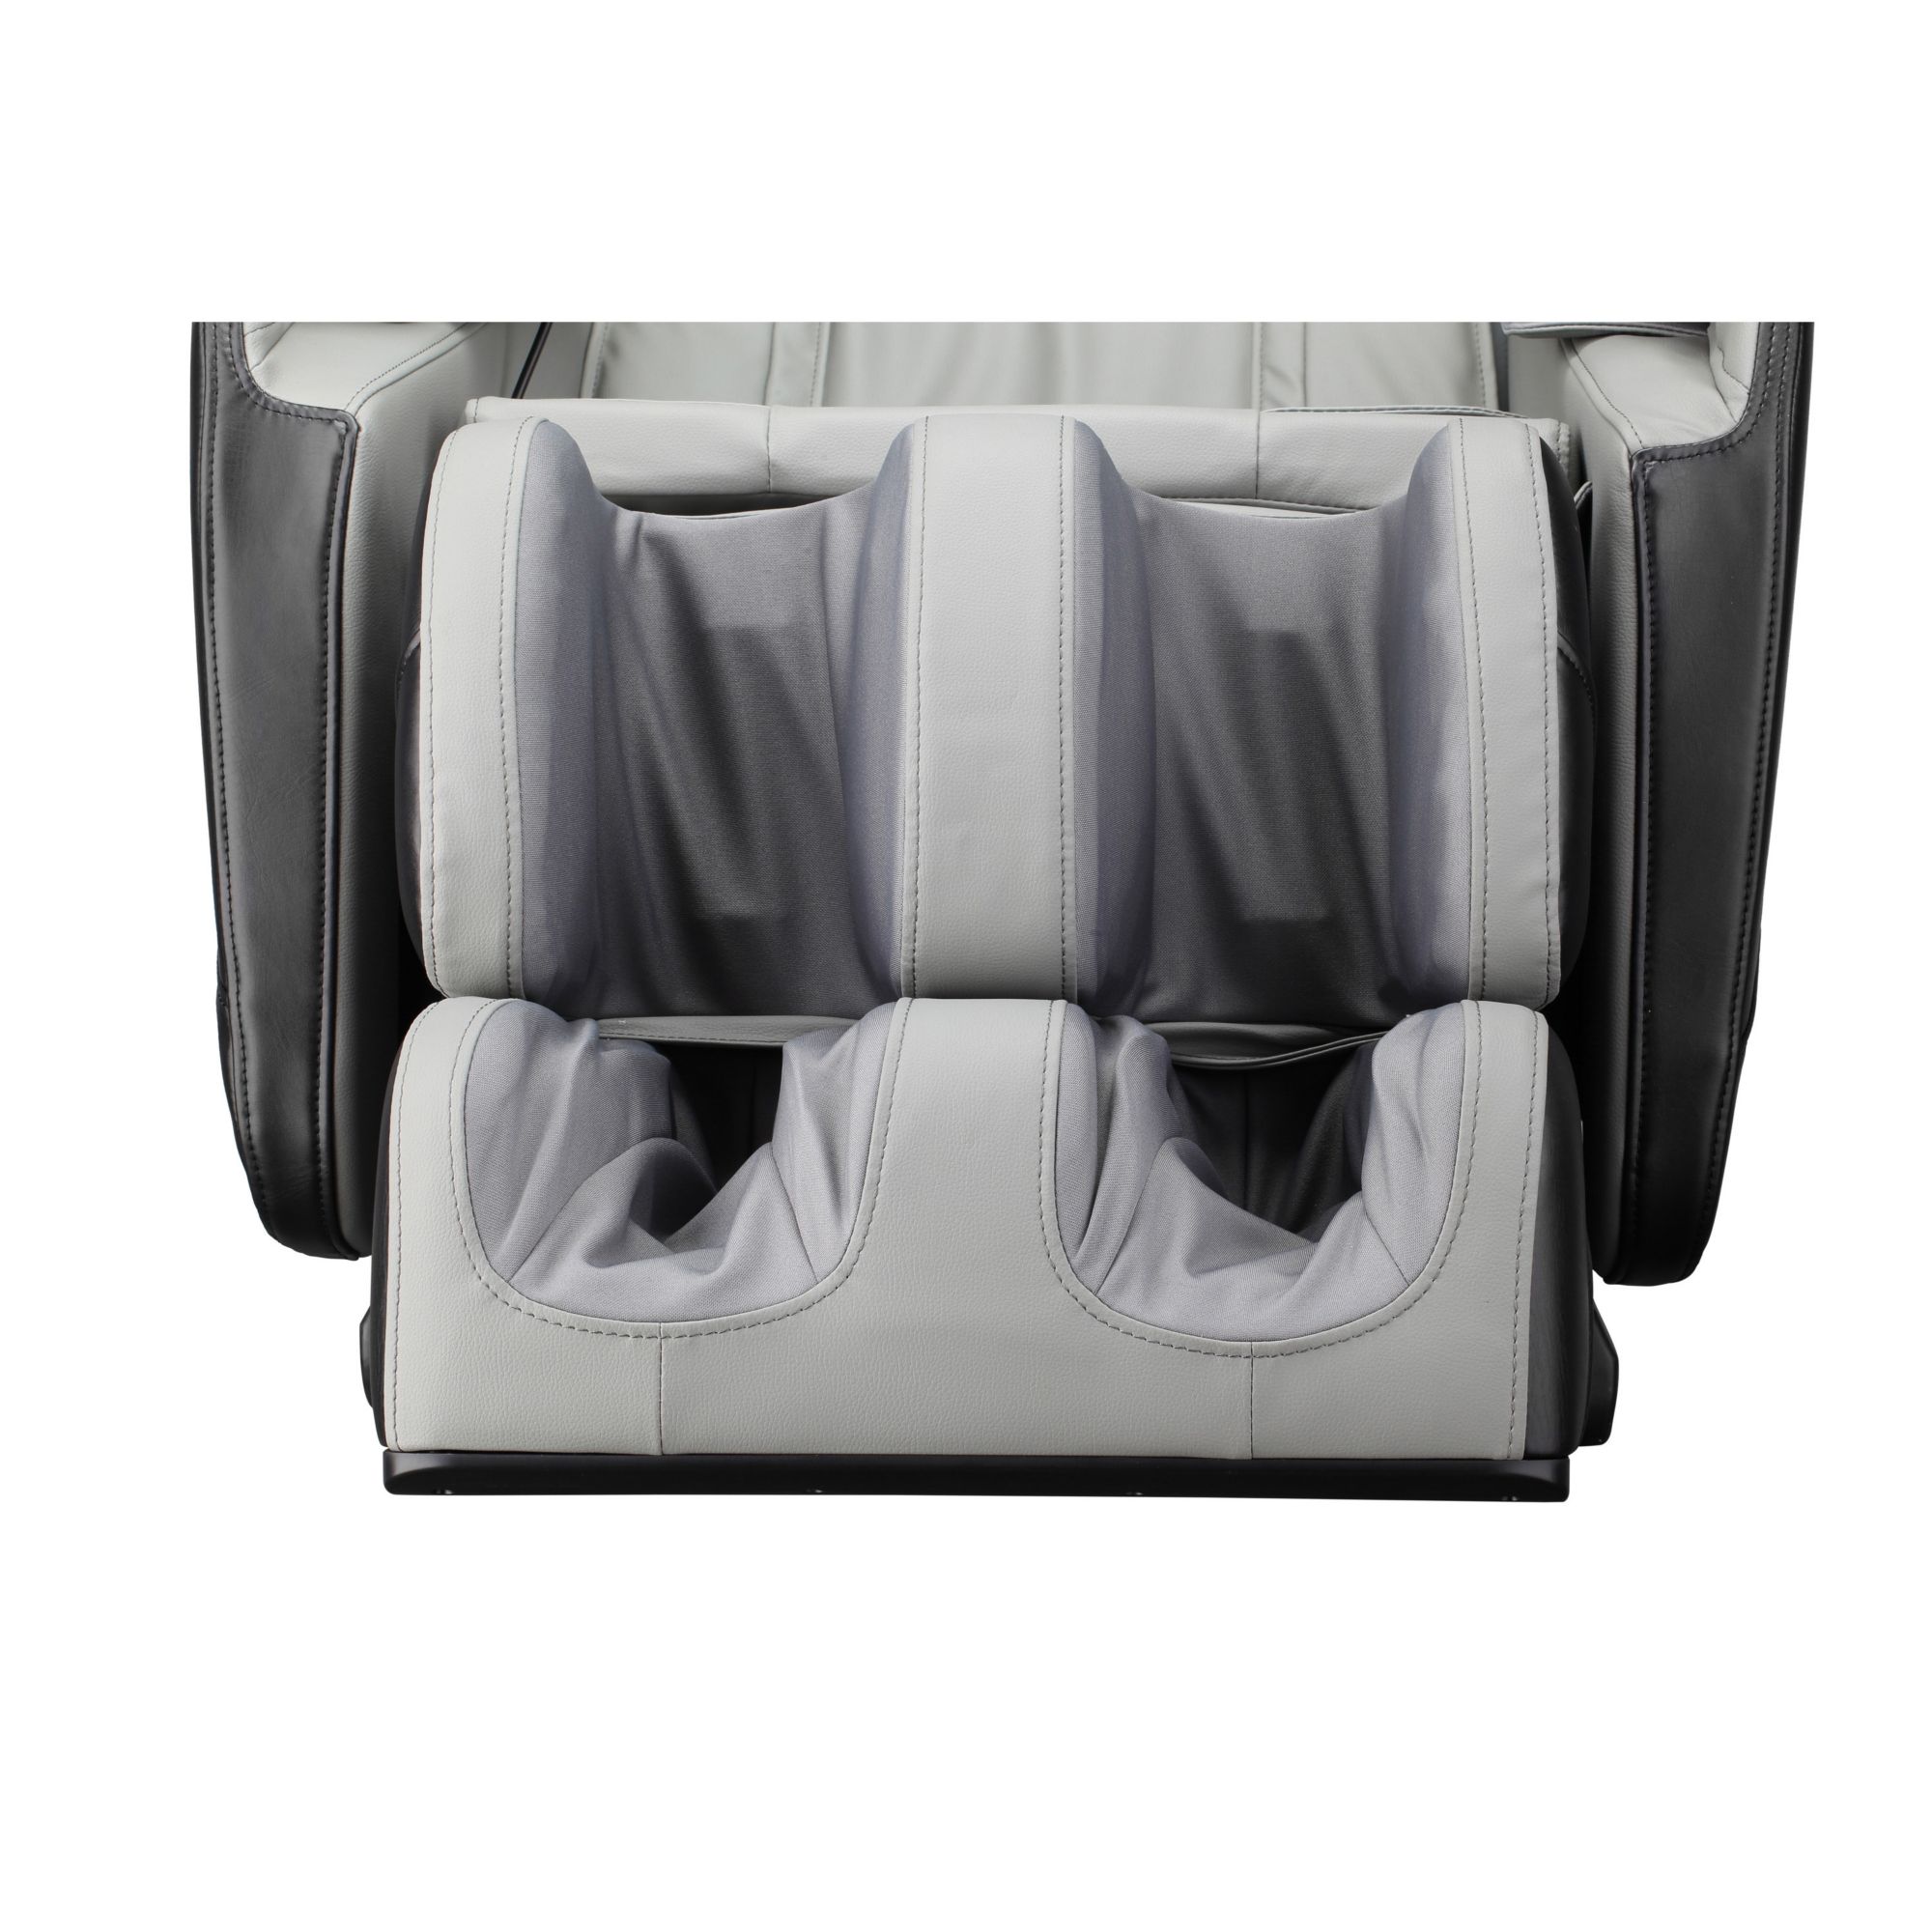 Lifesmart 2D Zero Gravity Massage Chair - Black/Gray